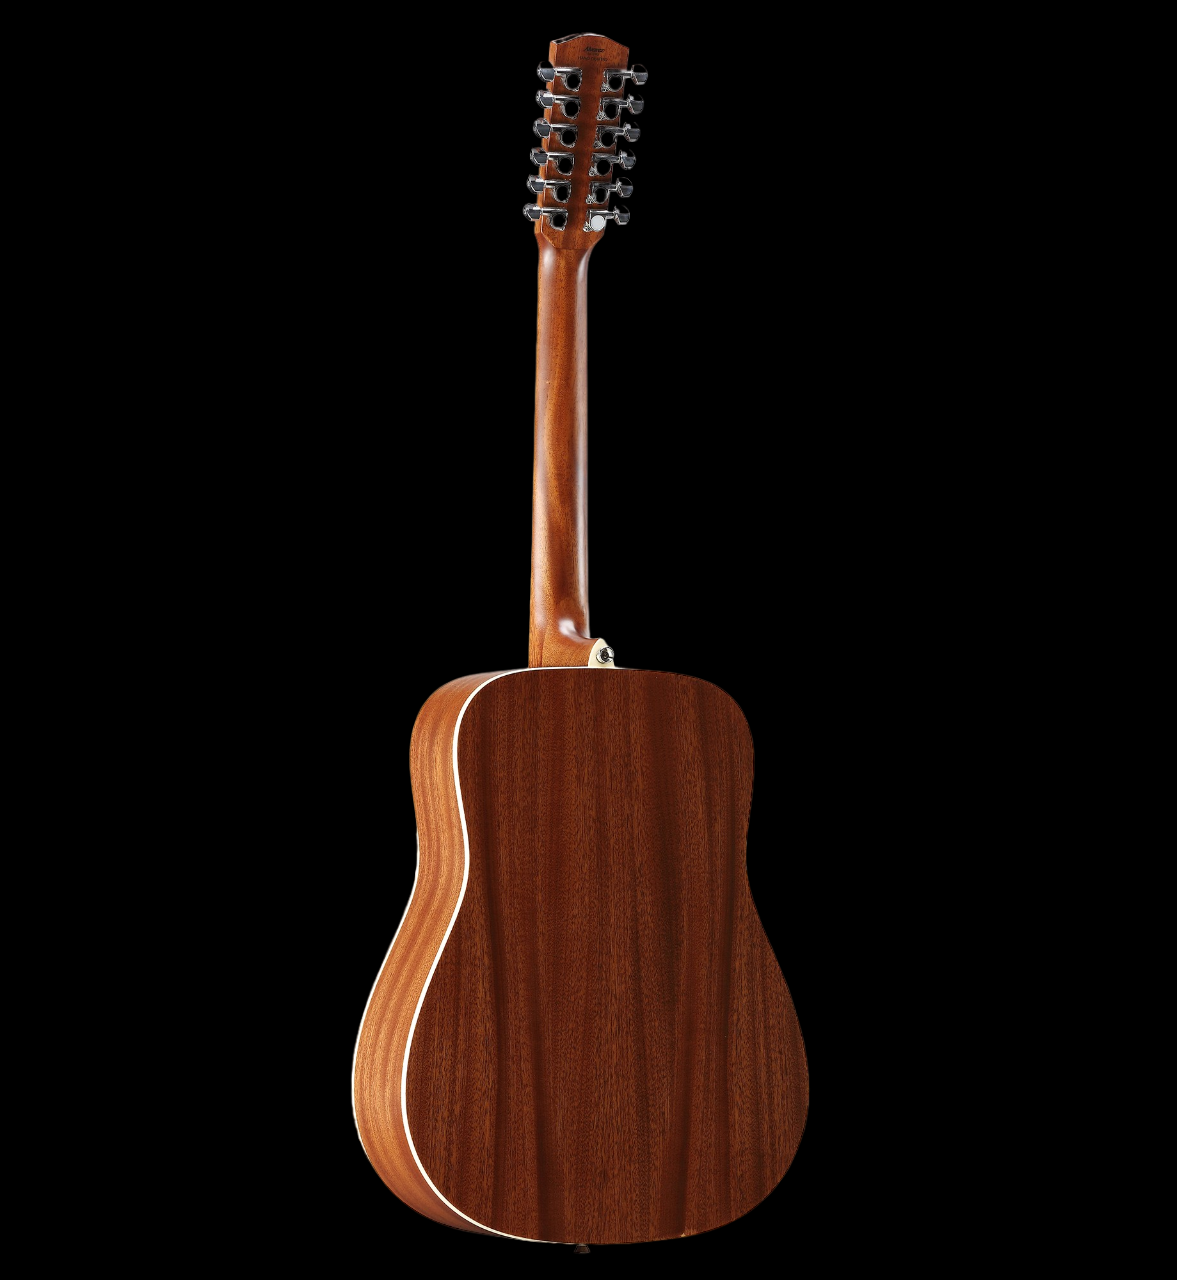 Alvarez AD60-12 Artist 60 Series Dreadnought 12-String Acoustic Guitar